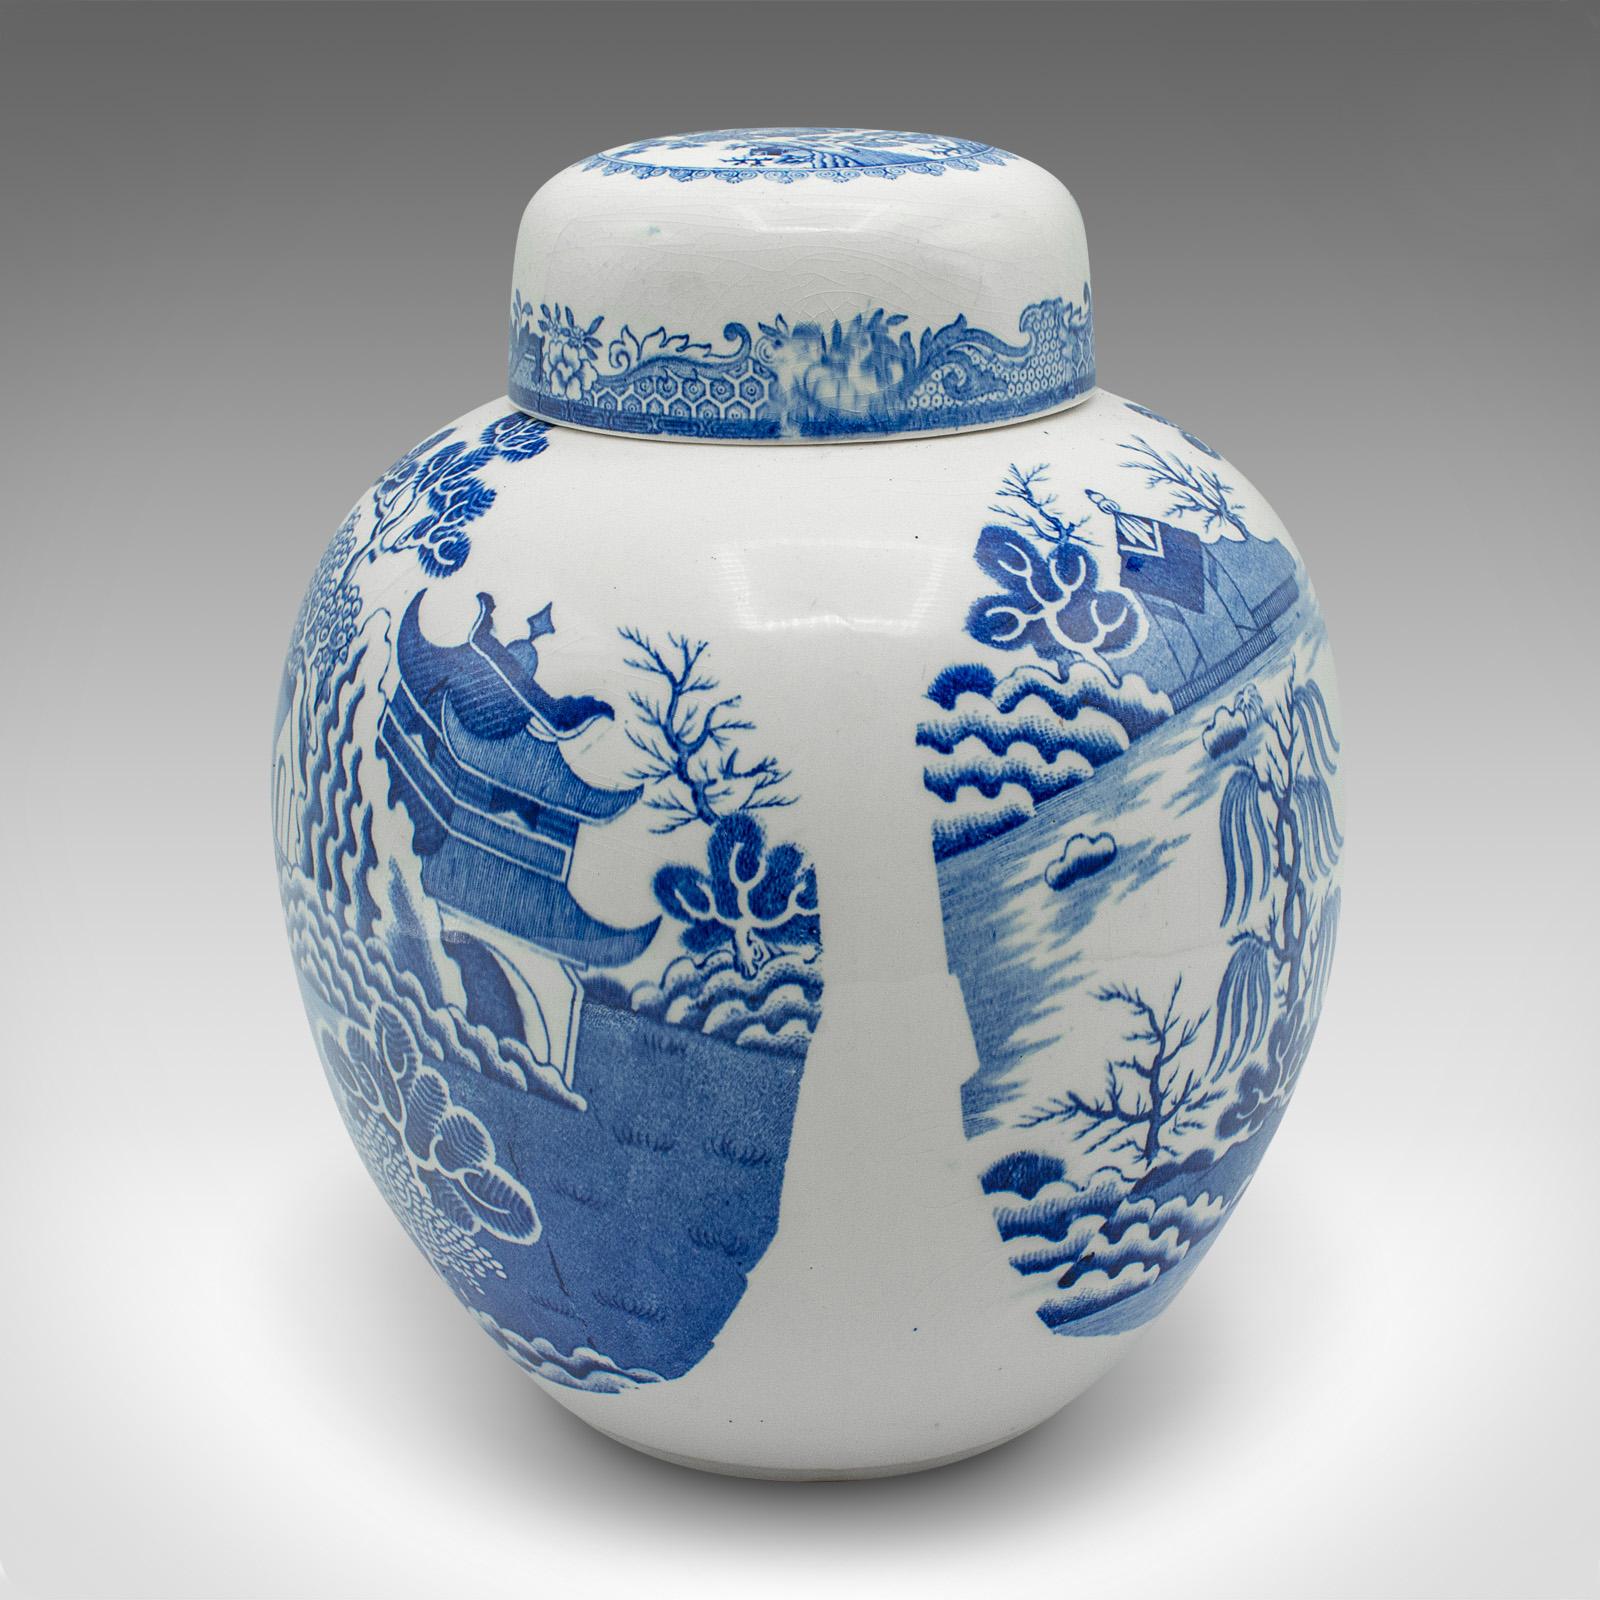 British Vintage Ginger Jar, English, Ceramic, Decorative Spice Urn, Blue and White, 1970 For Sale